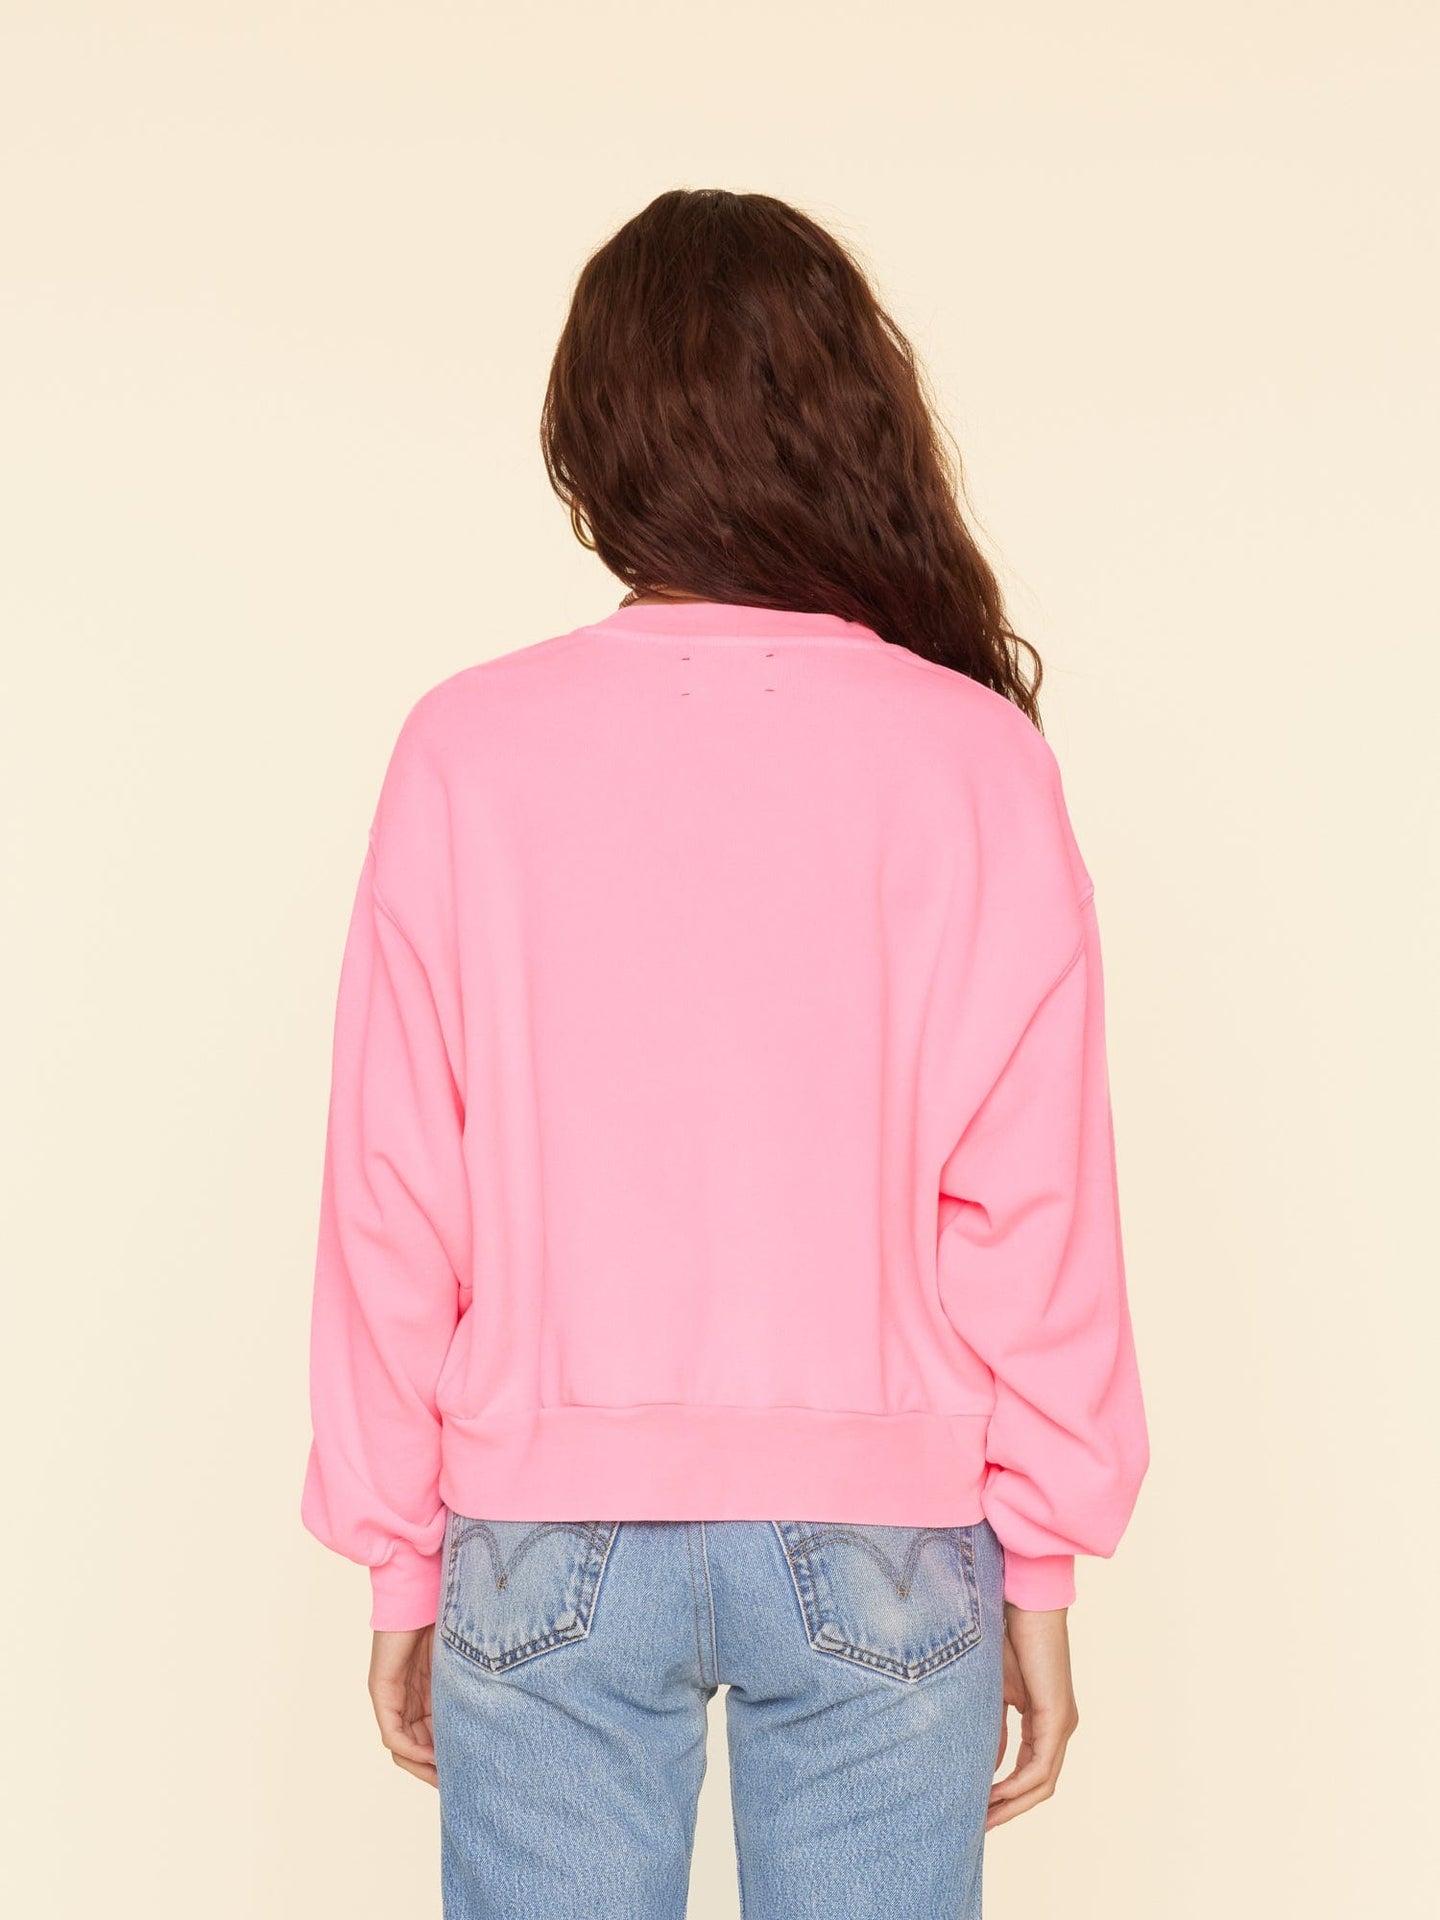 Xirena Sweatshirt Pink Torch Huxley Sweatshirt